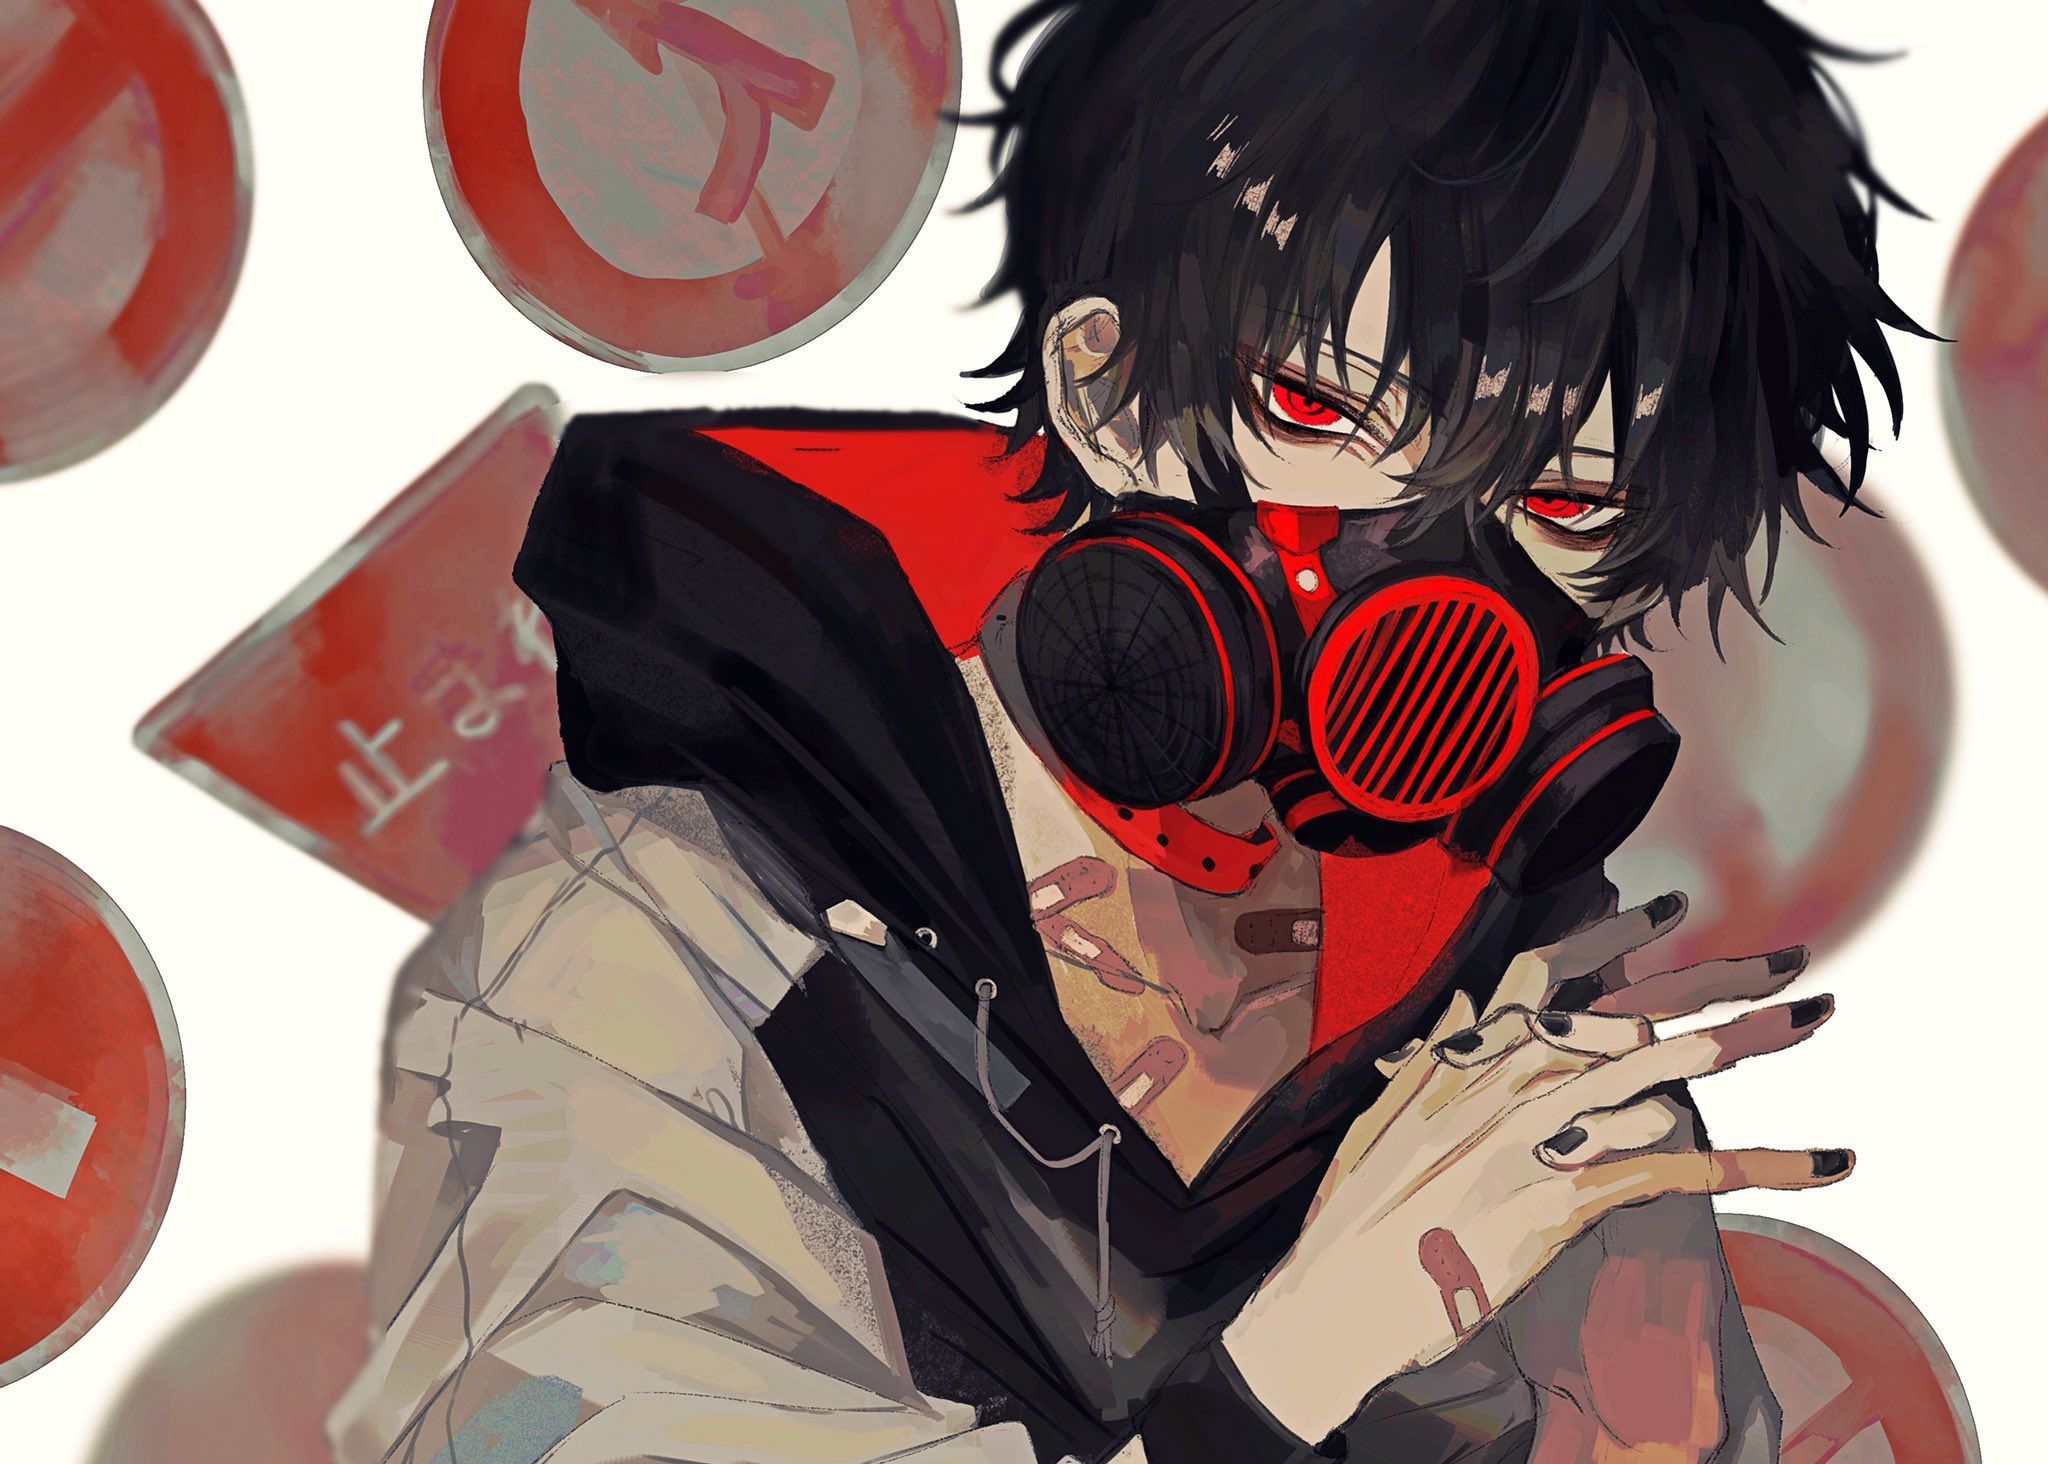 Desktop Wallpaper Hei Darker Than Black Anime Boy Red Eyes Hd Image  Picture Background 8f2679